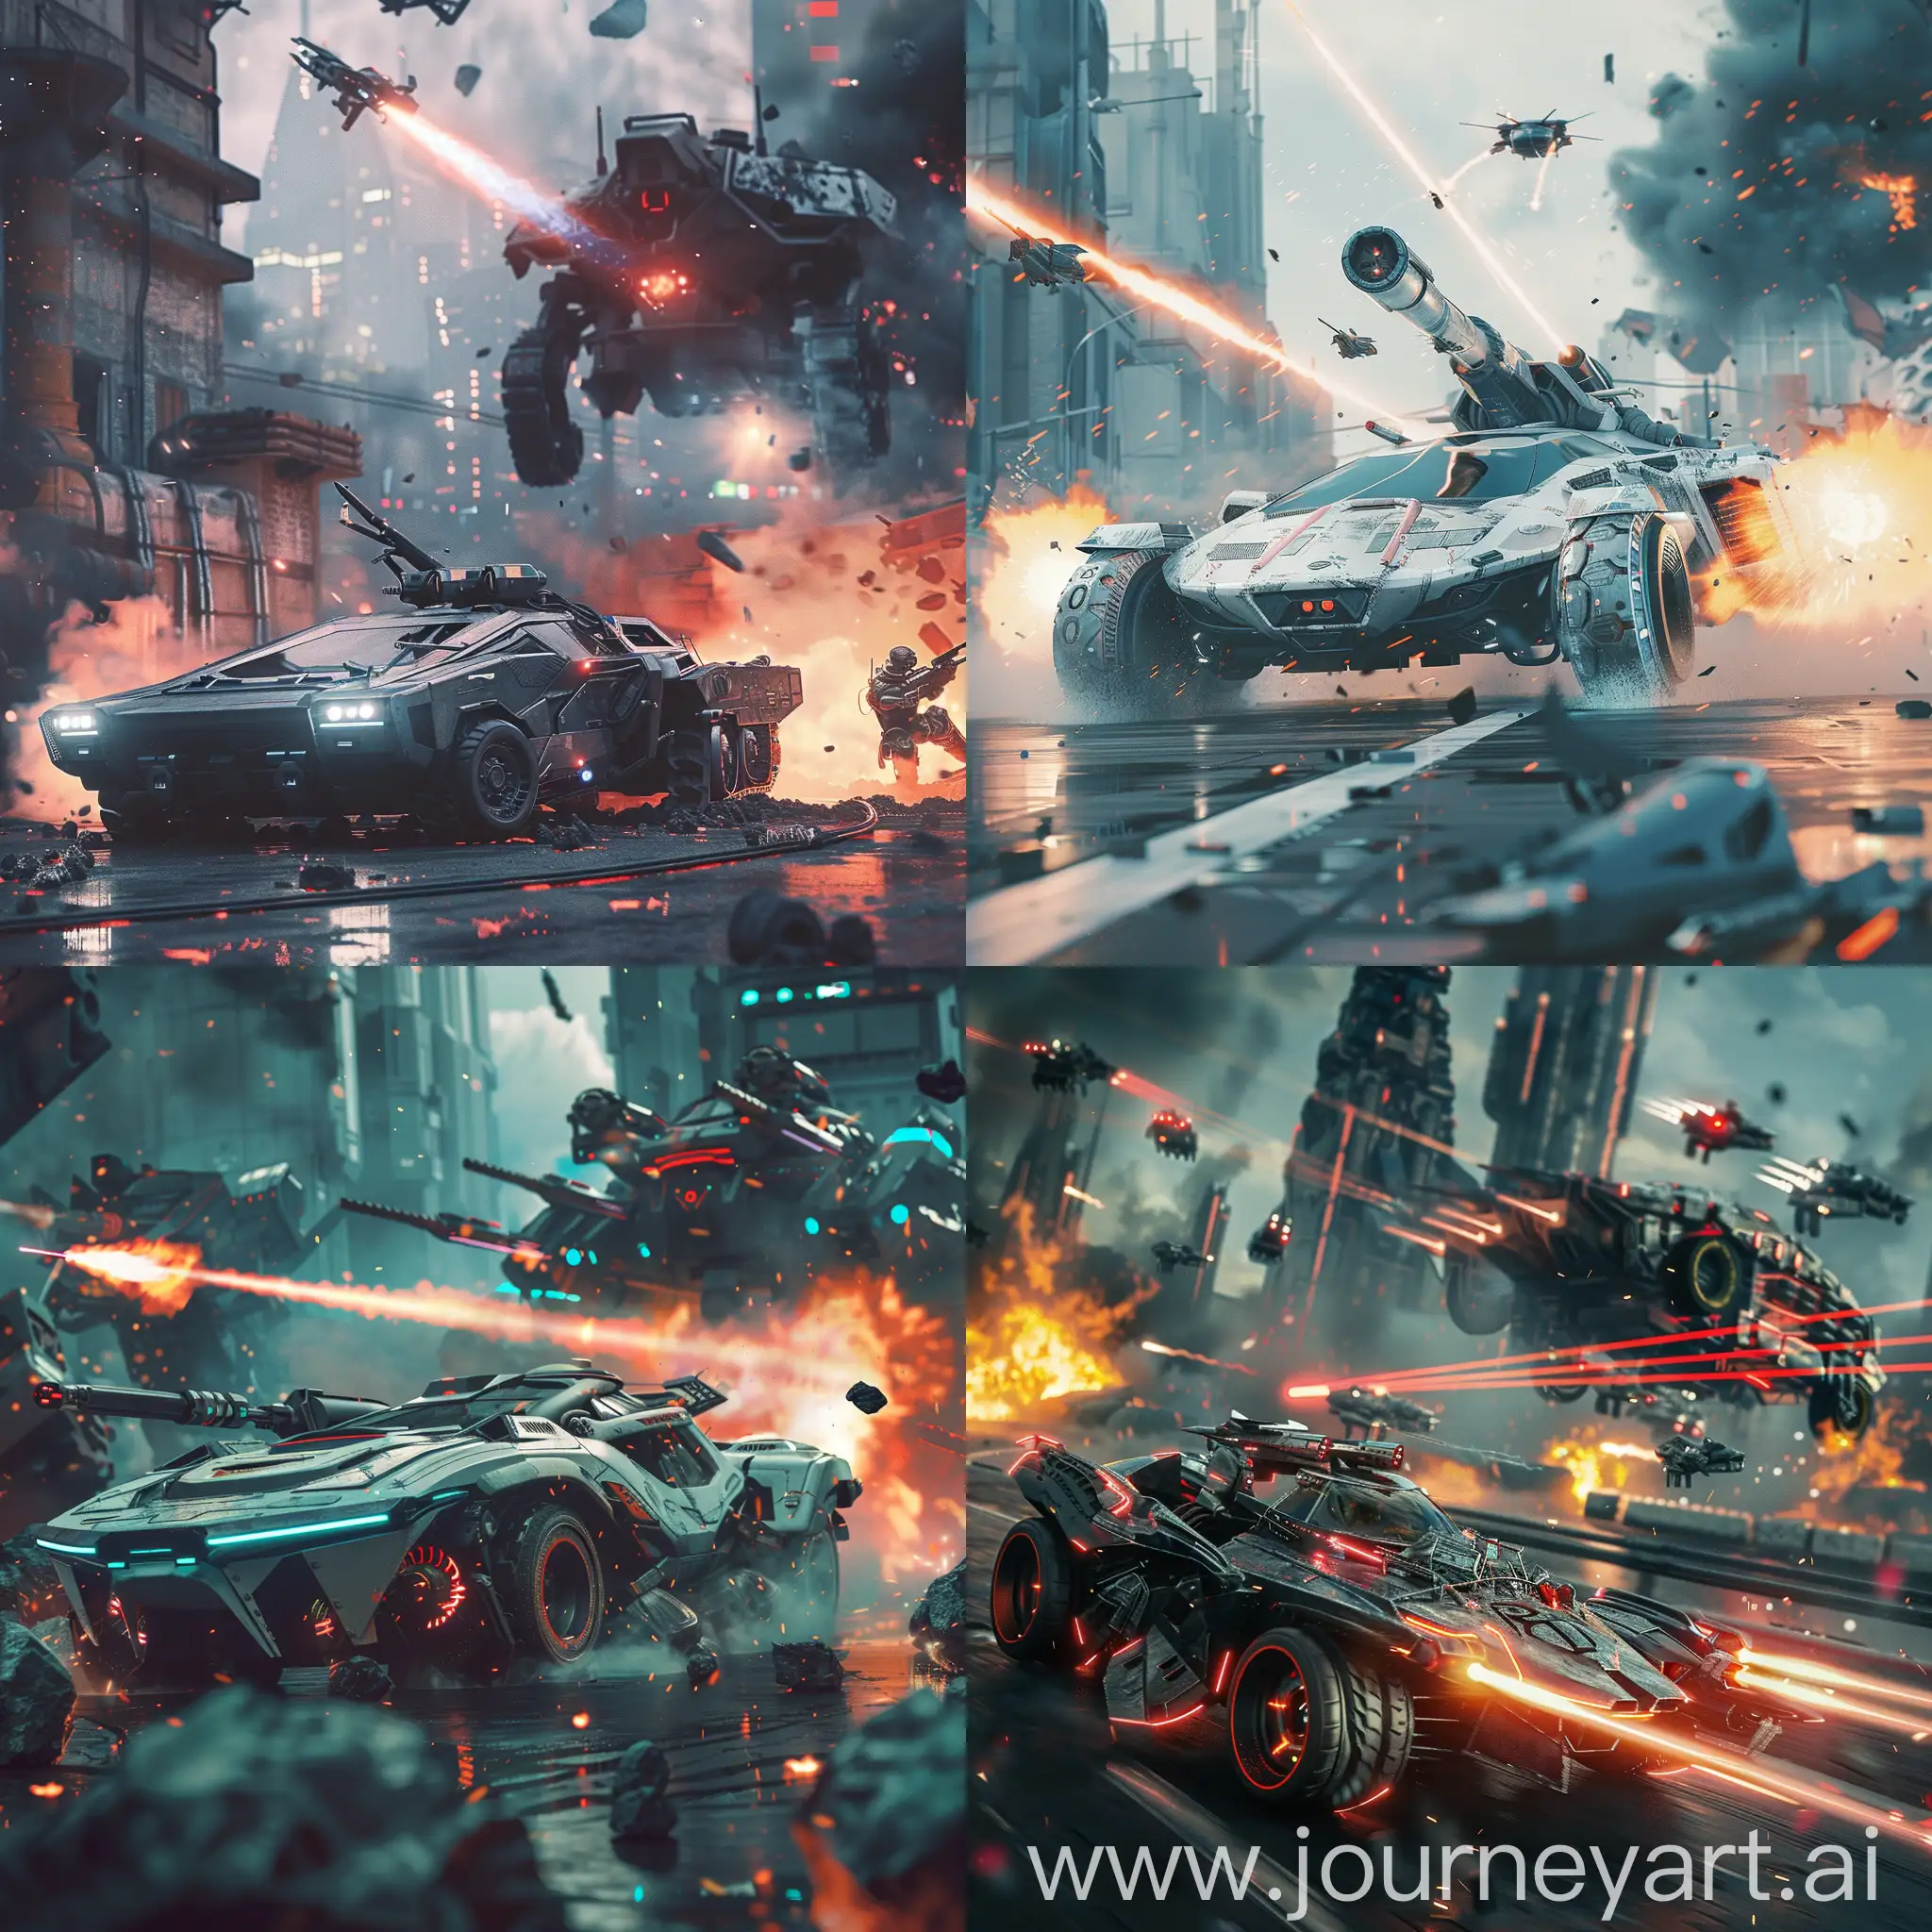 Futuristic-Mech-Tank-Car-with-Plasma-Guns-in-Dynamic-Photorealistic-War-Scene